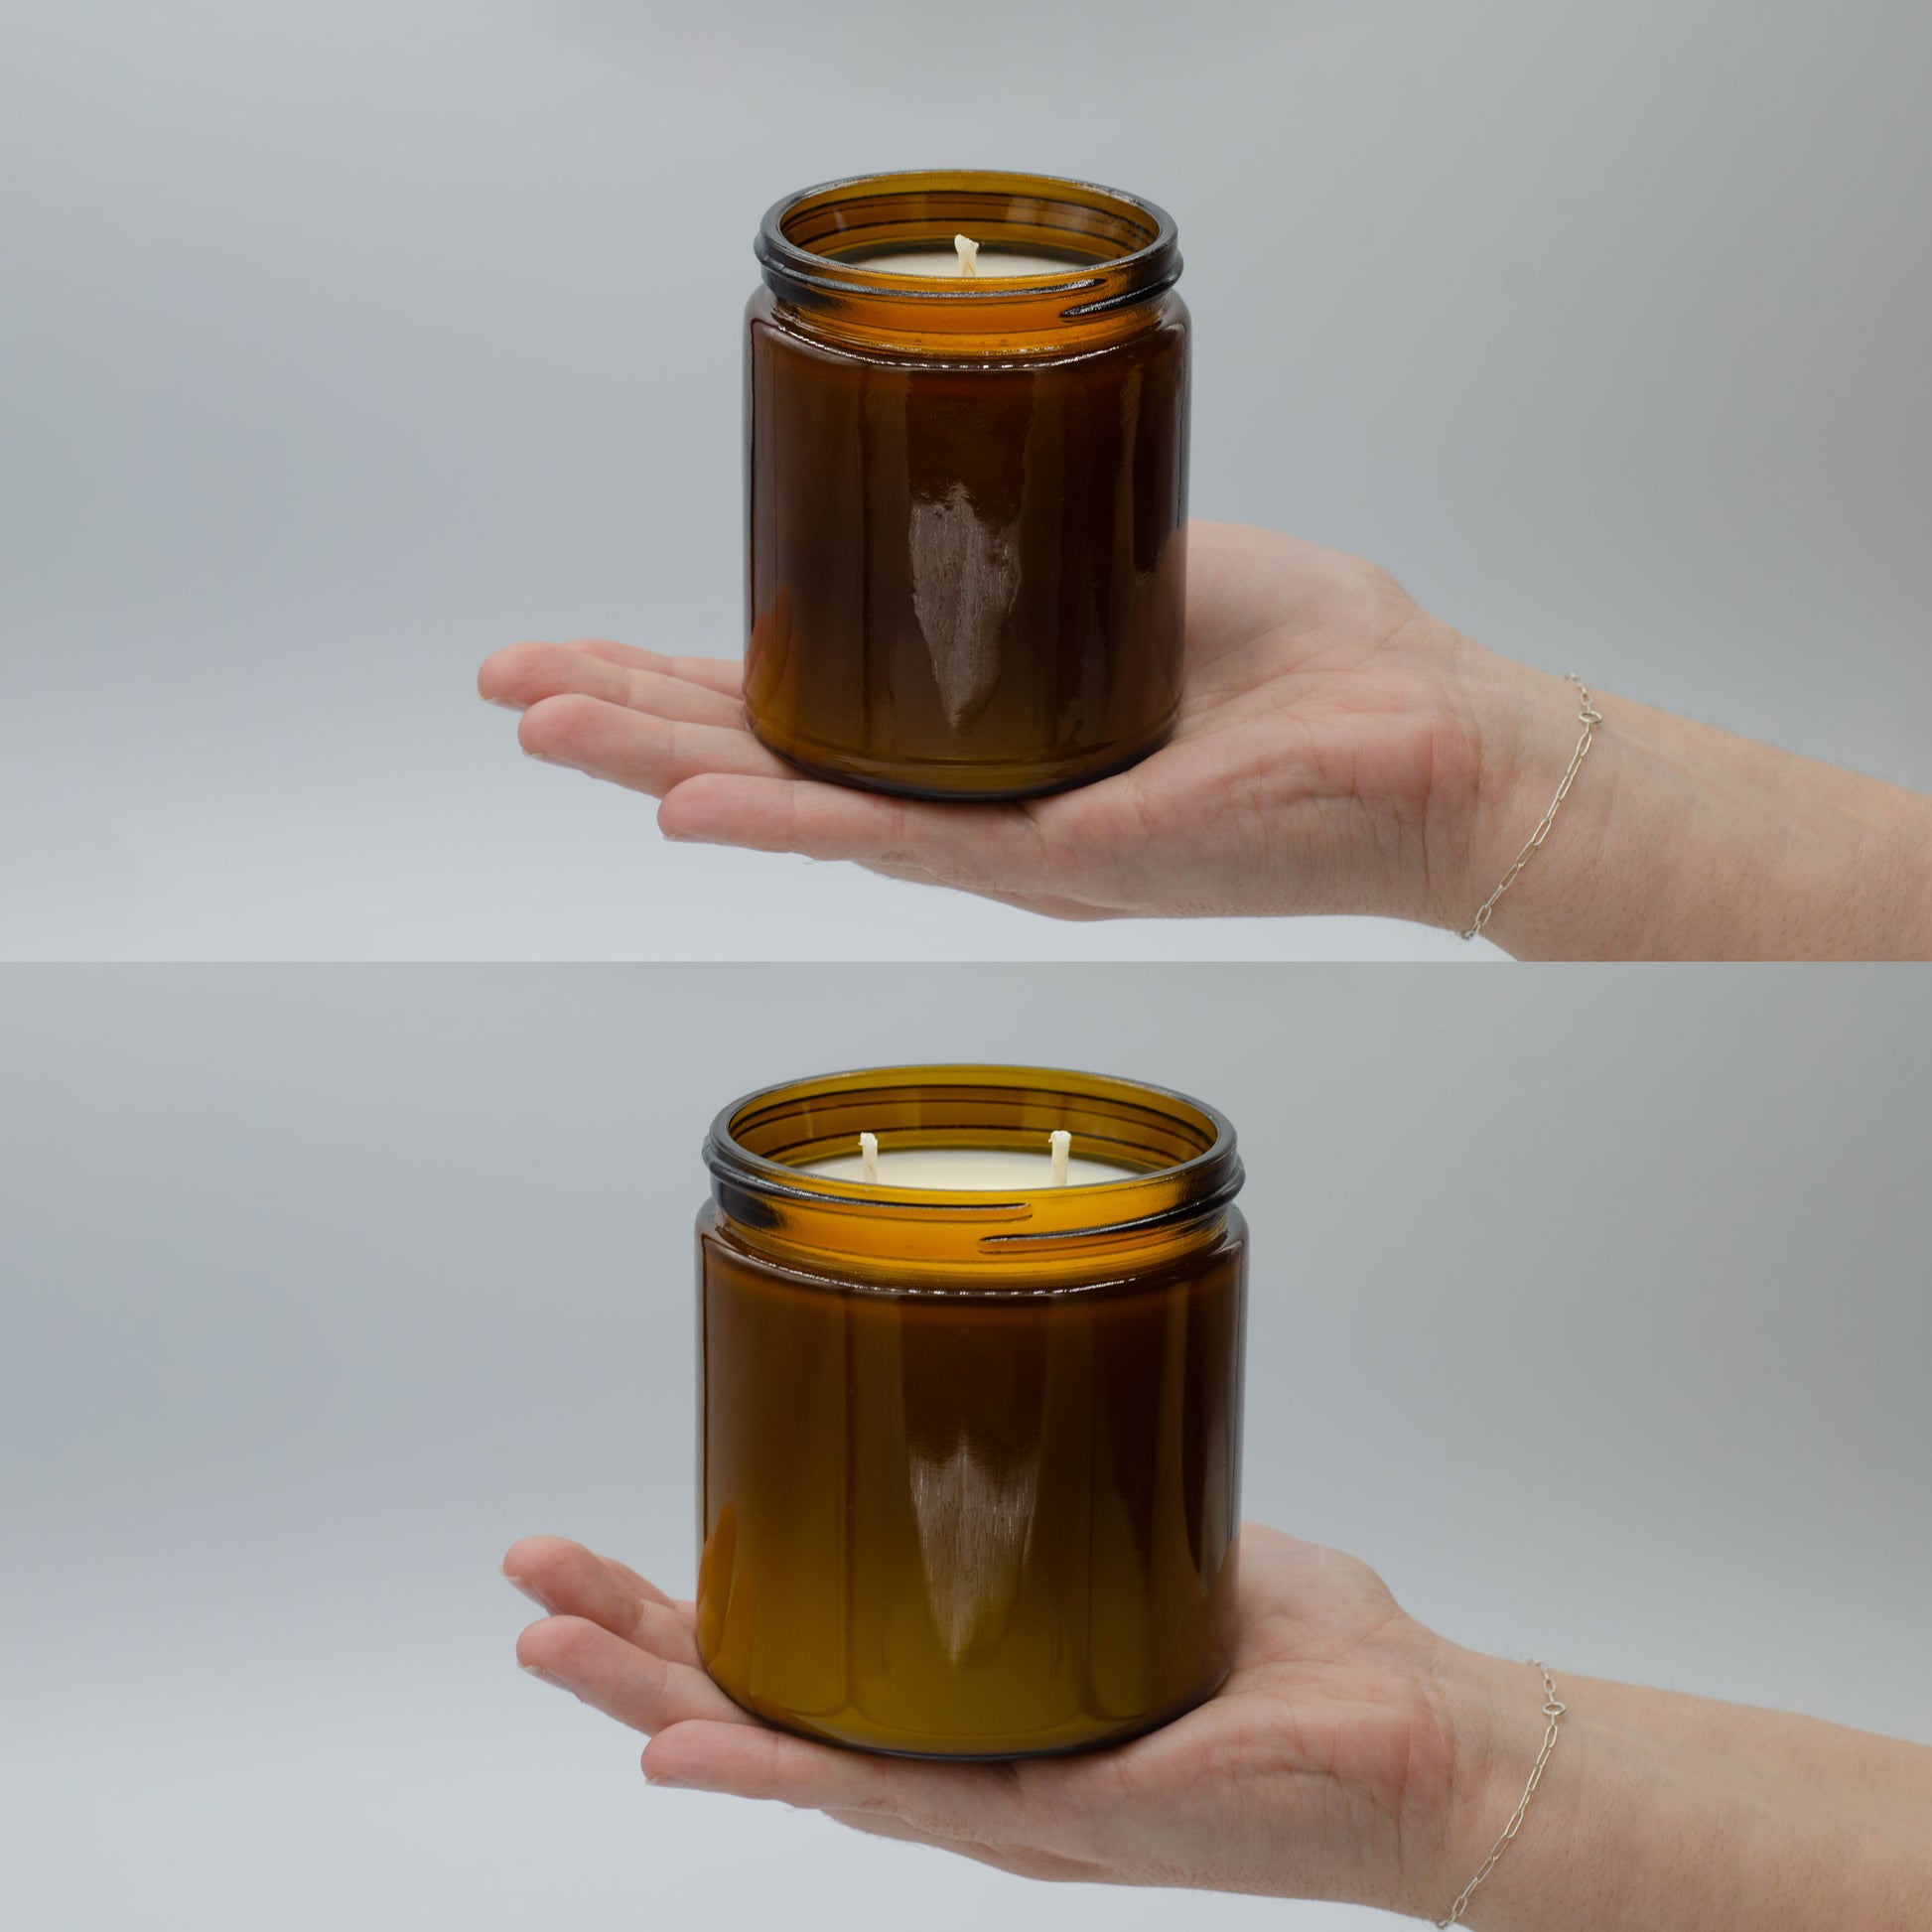 Bookworm Soy Candle - 6oz tin or 8oz glass jar